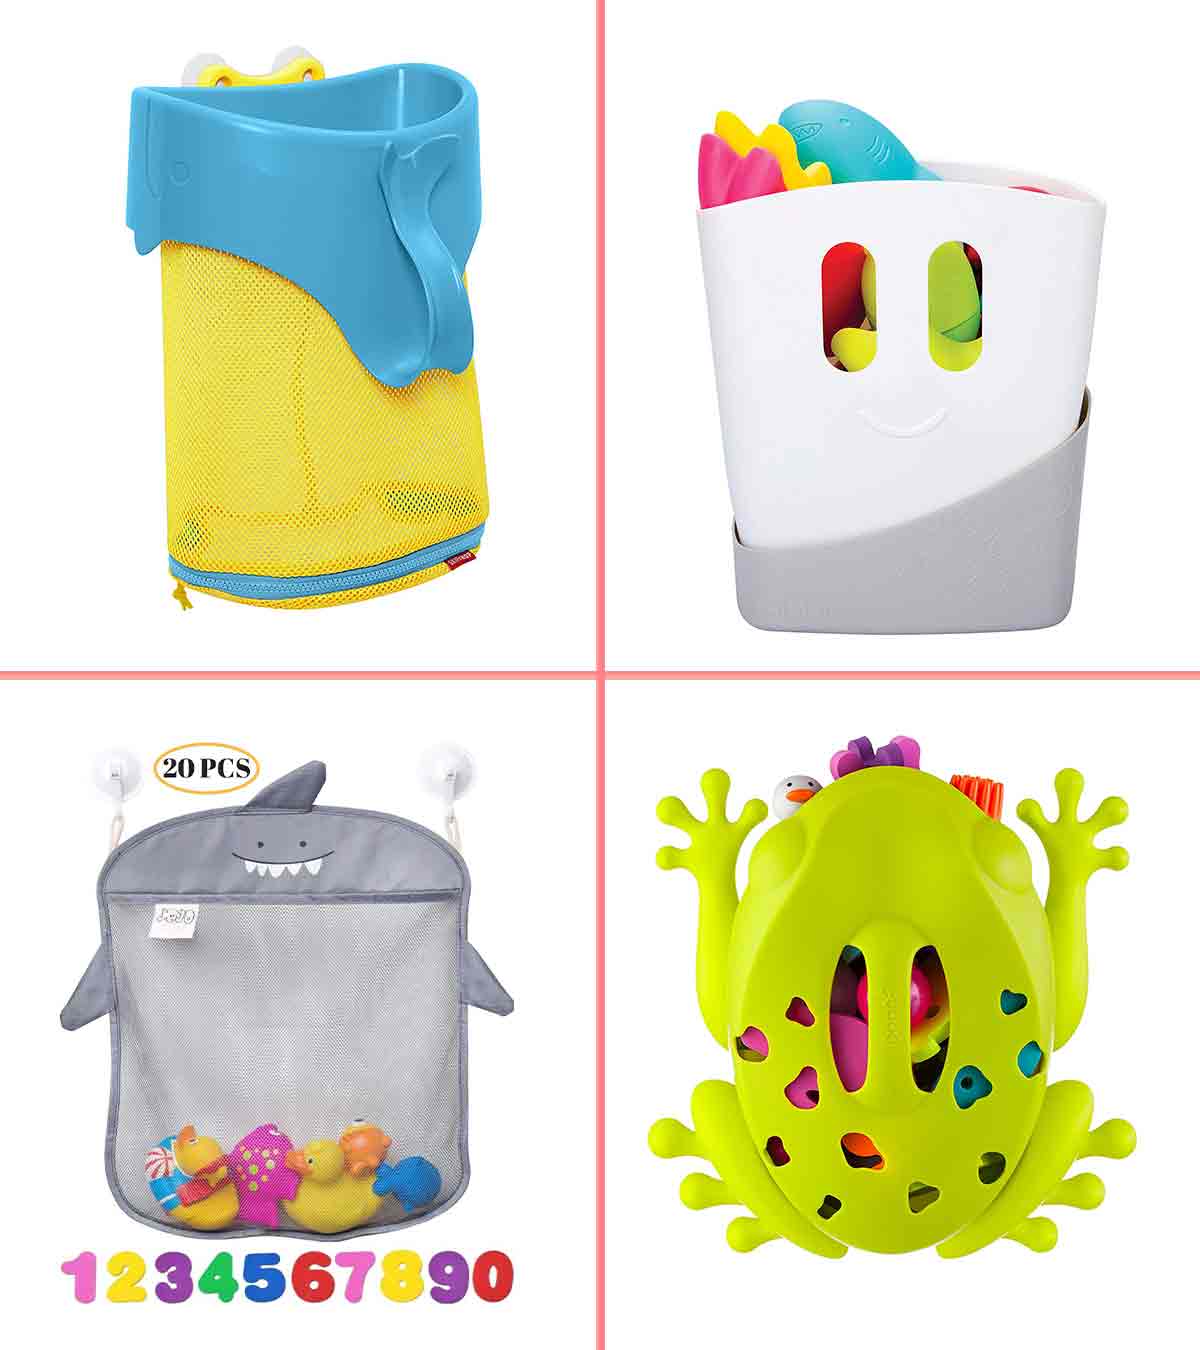 Blue Bathroom Waterproof Adjustable Toy Organiser Storage Bag Baby Suction Cup Bath Corner Triangle Blue & Pink